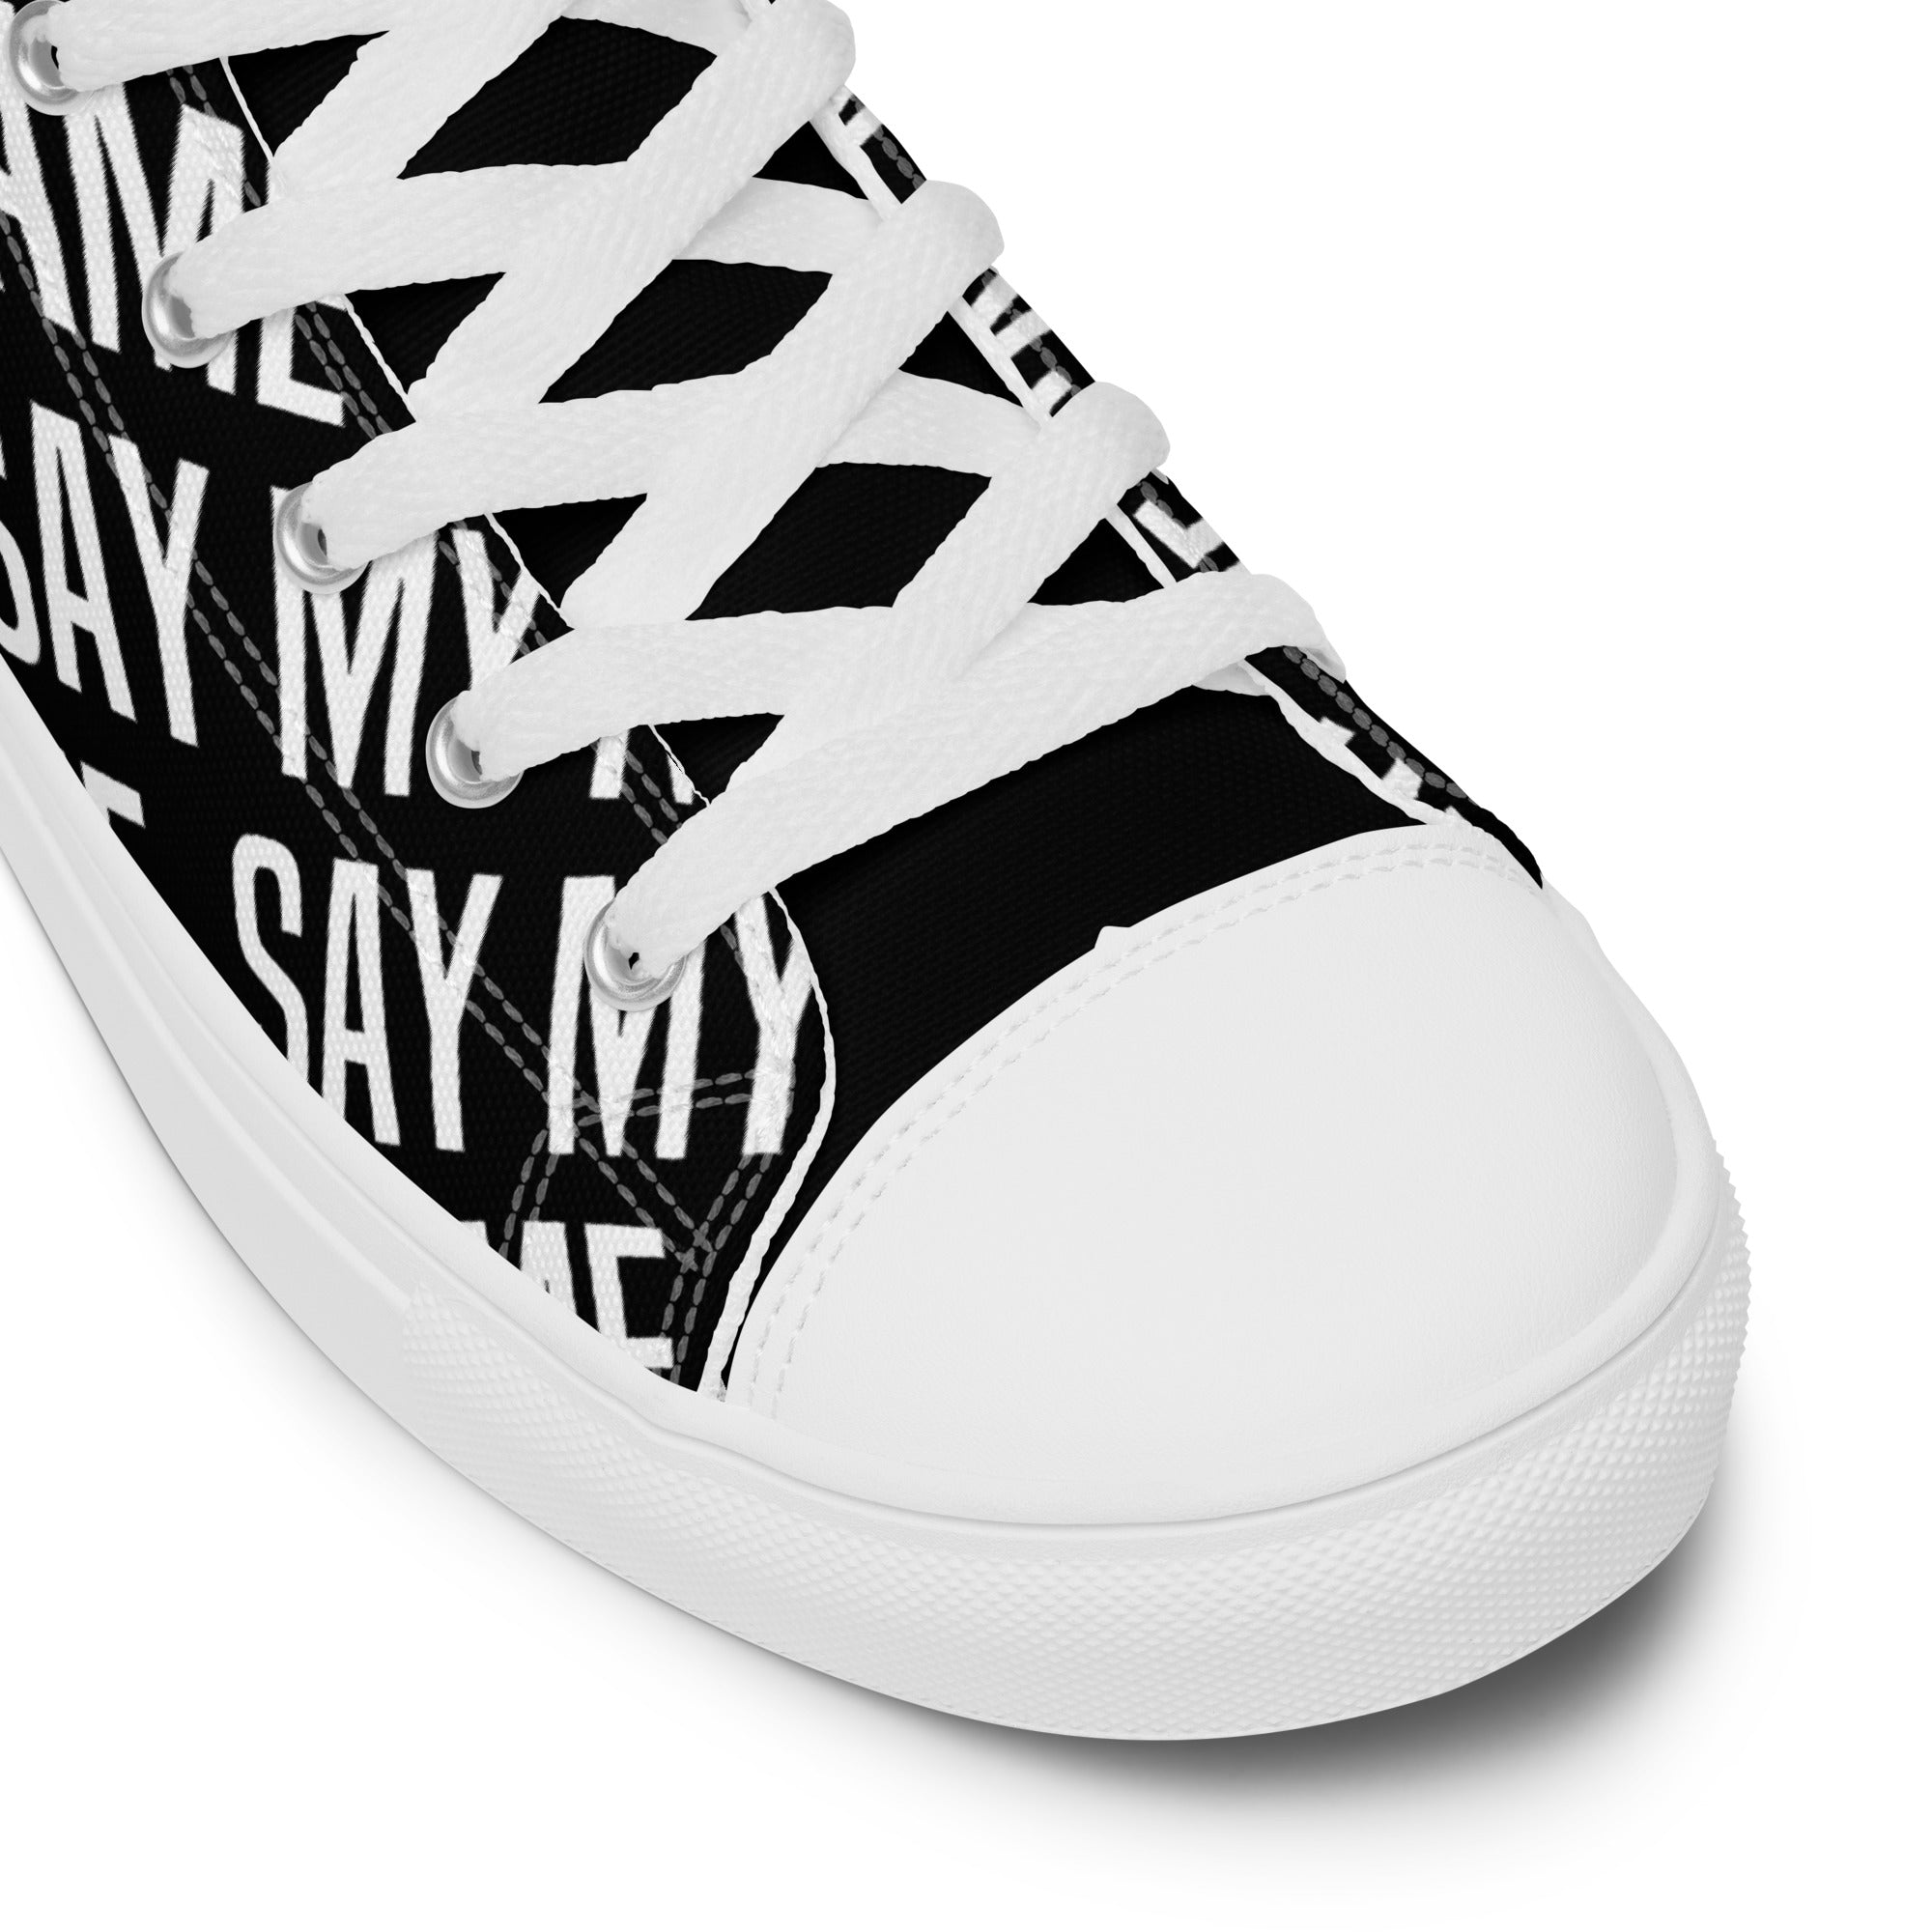 "SAY MY NAME" men's high black canvas sneakers Multi